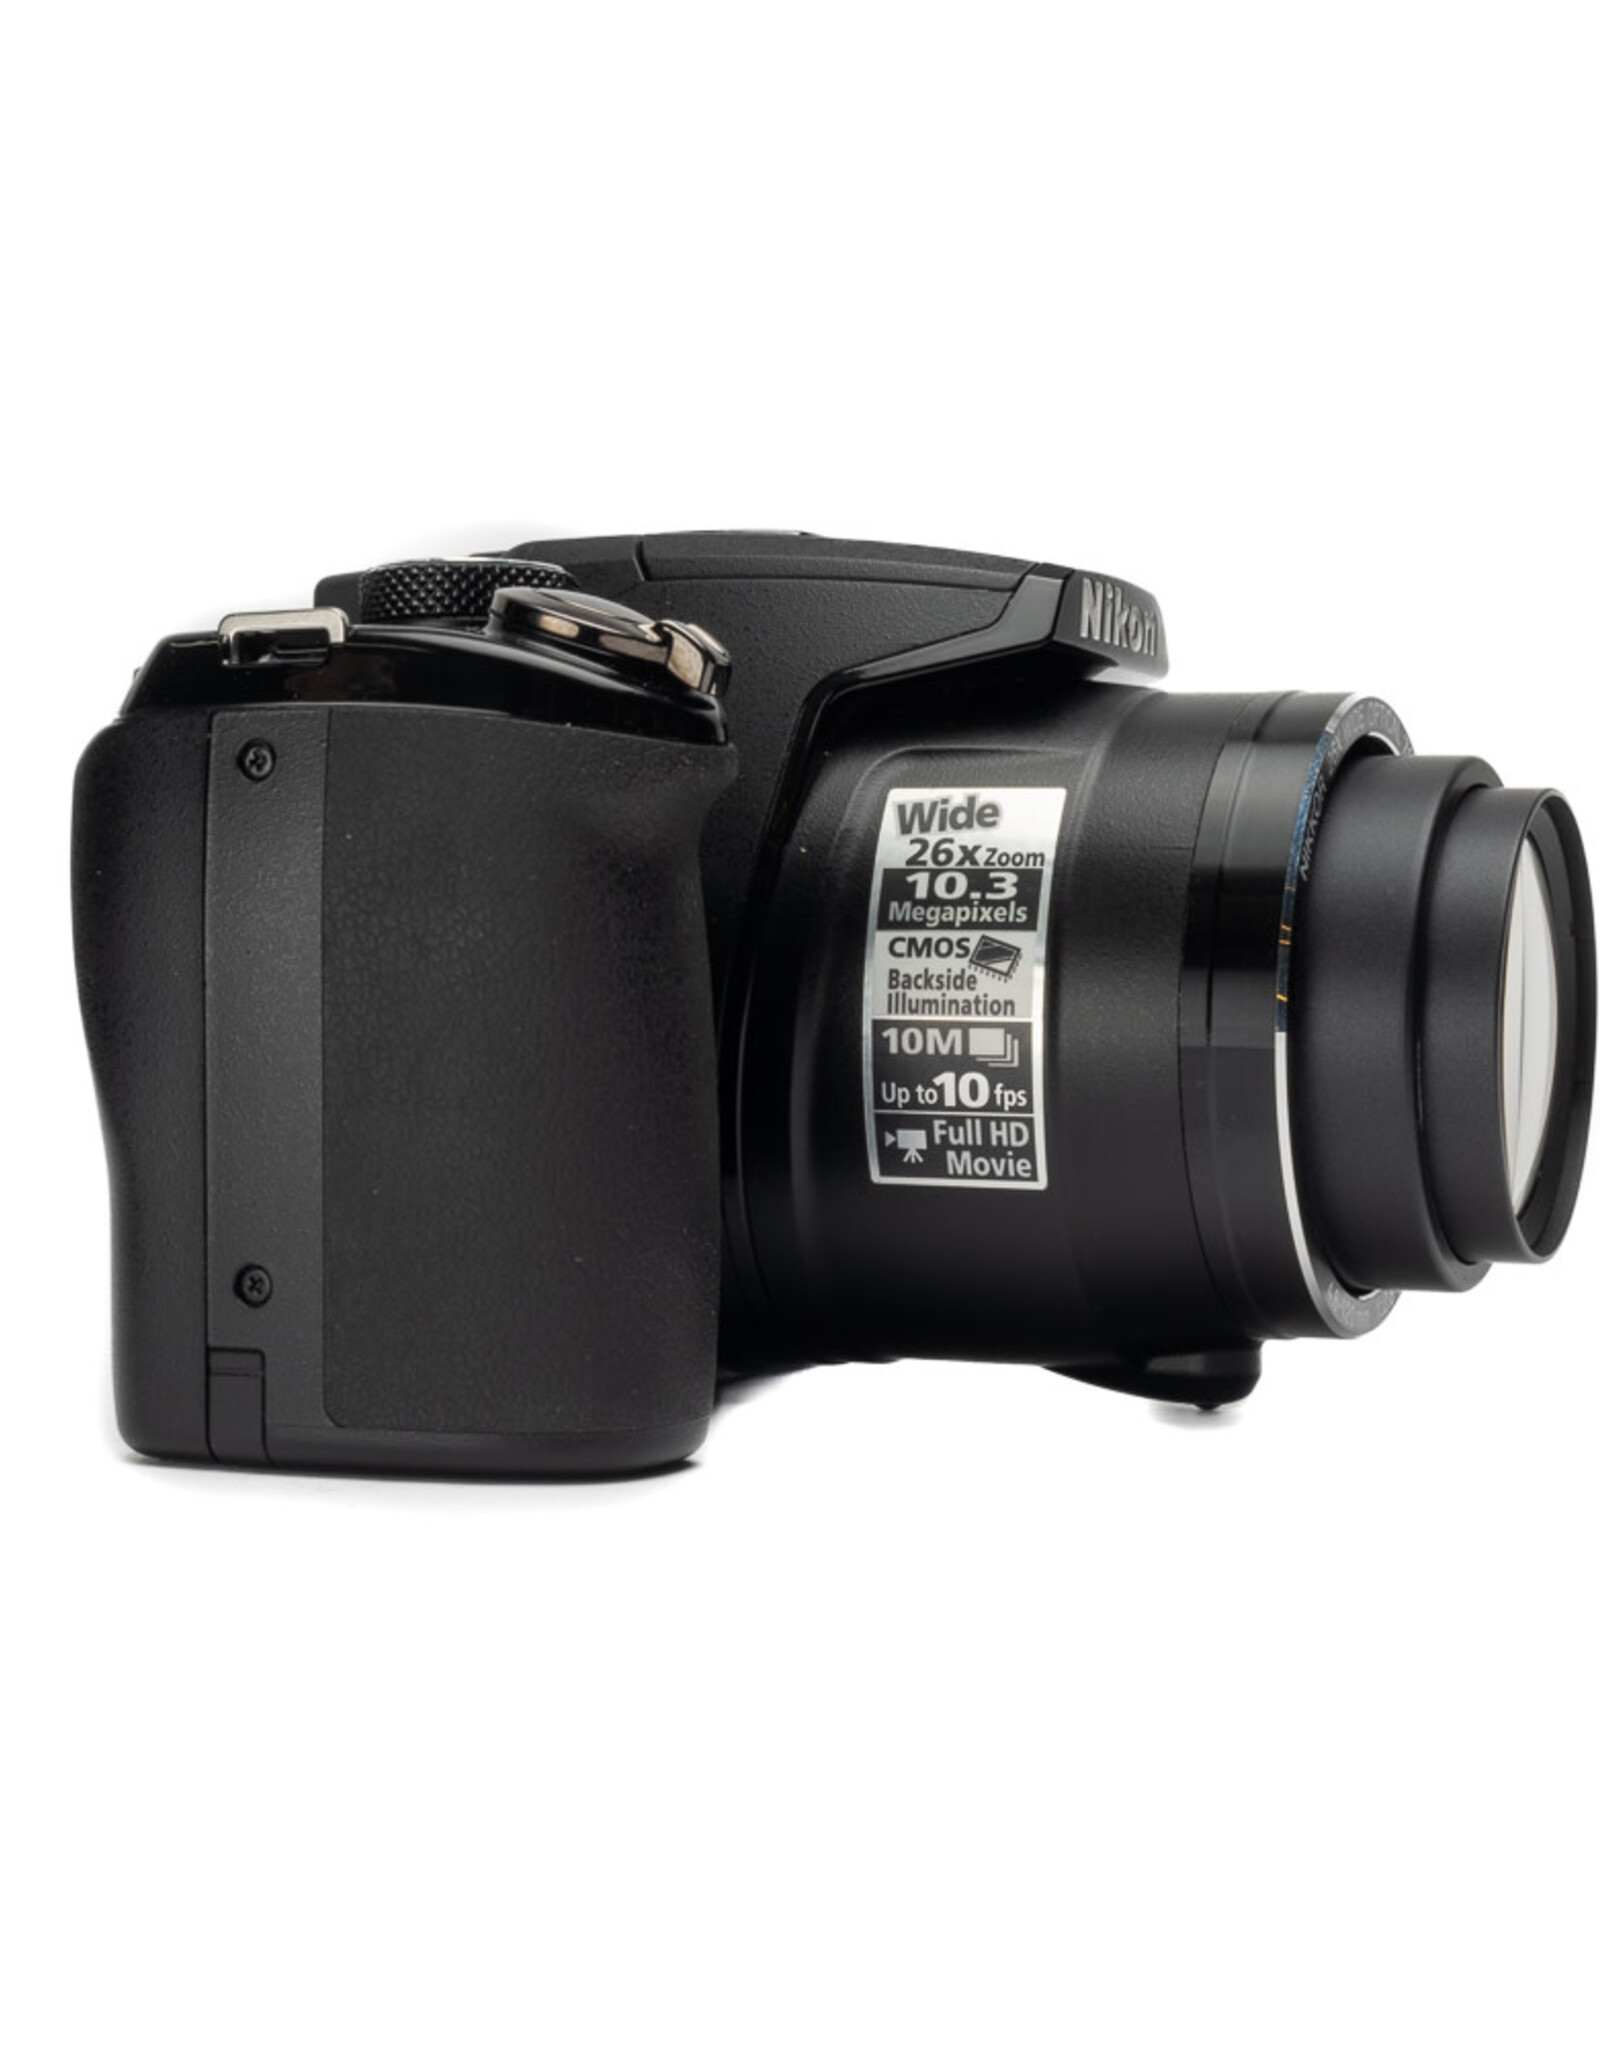 Nikon Nikon Coolpix P100 Compact Digital Camera